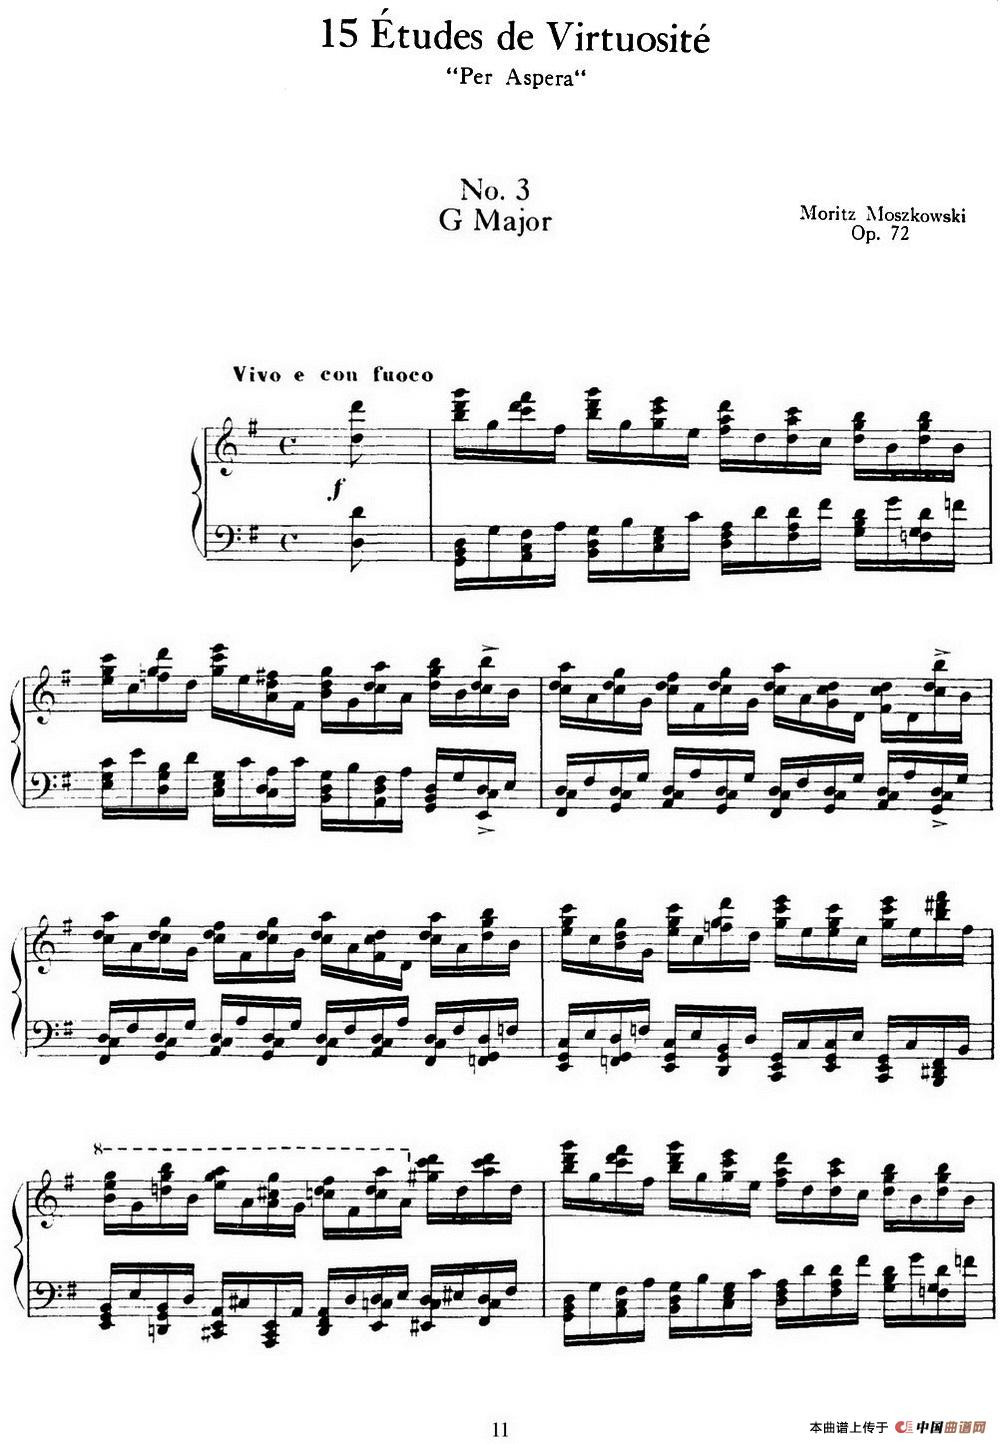 15 Etudes de Virtuosité Op.72 No.3 （十五首钢琴练习曲之三）(1)_011-.jpg